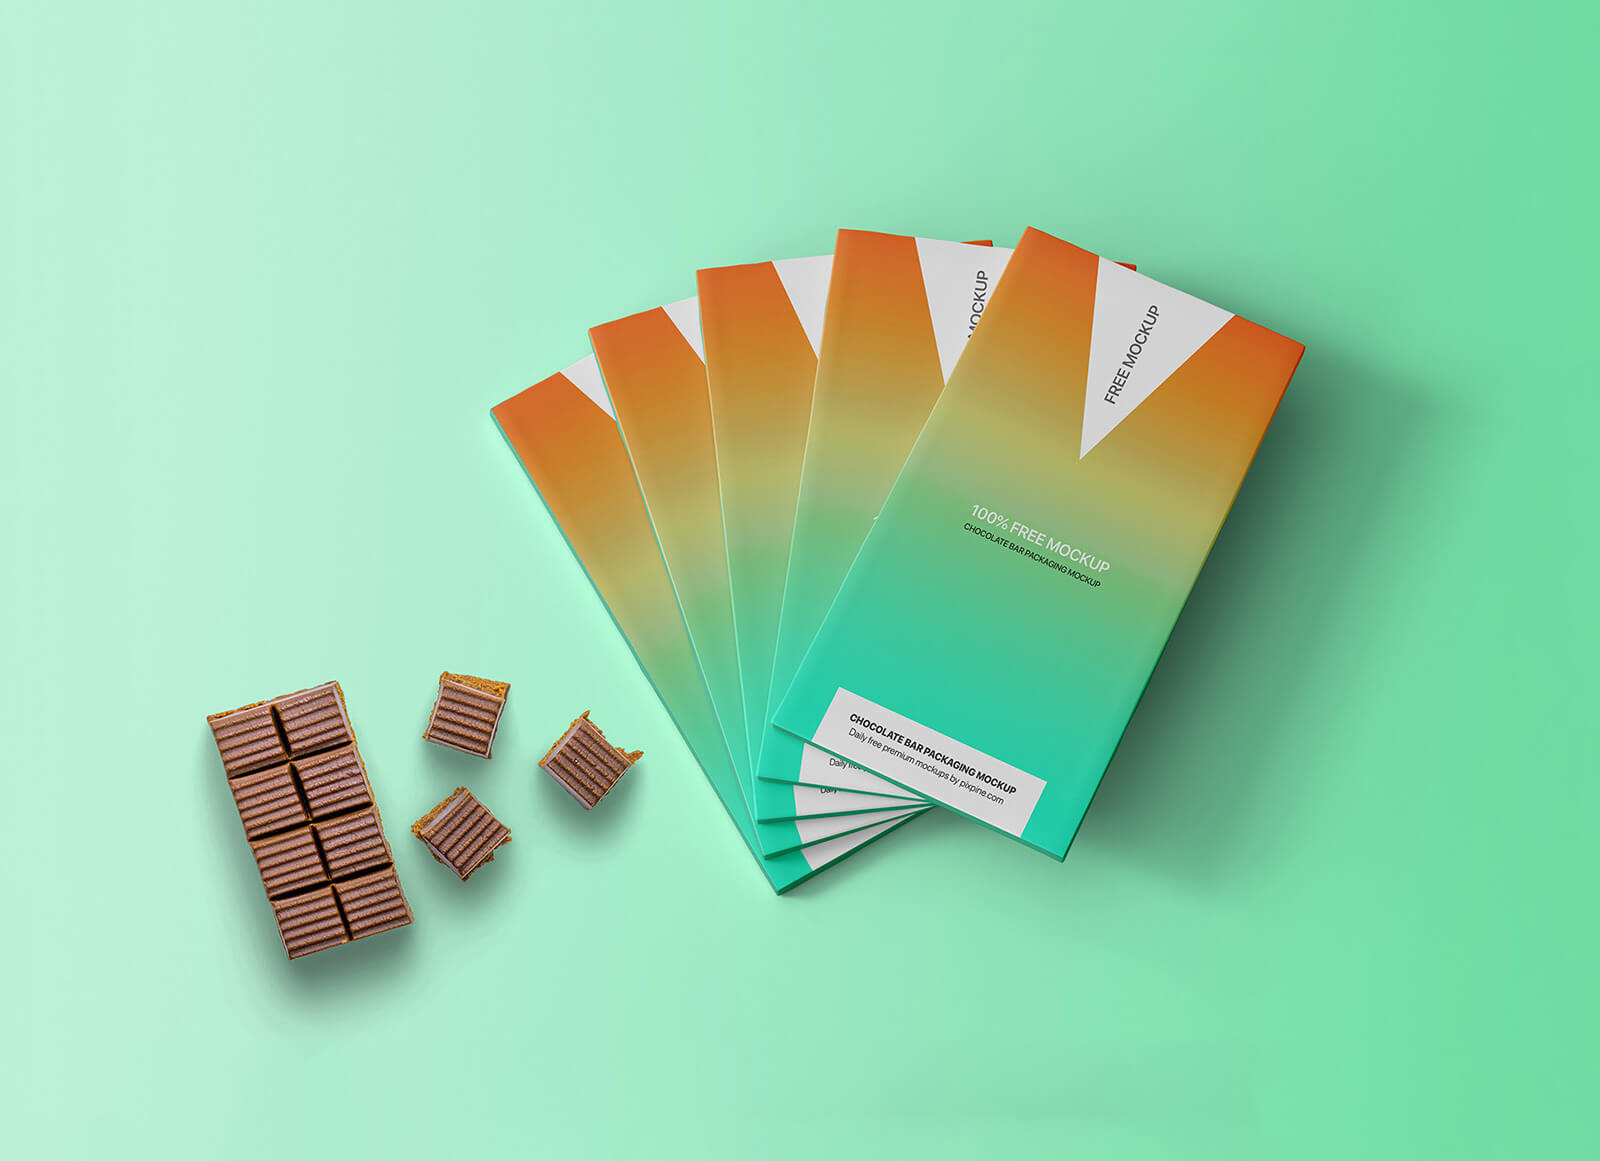 Free-Chocolate-Bar-Packaging-Mockup-PSD